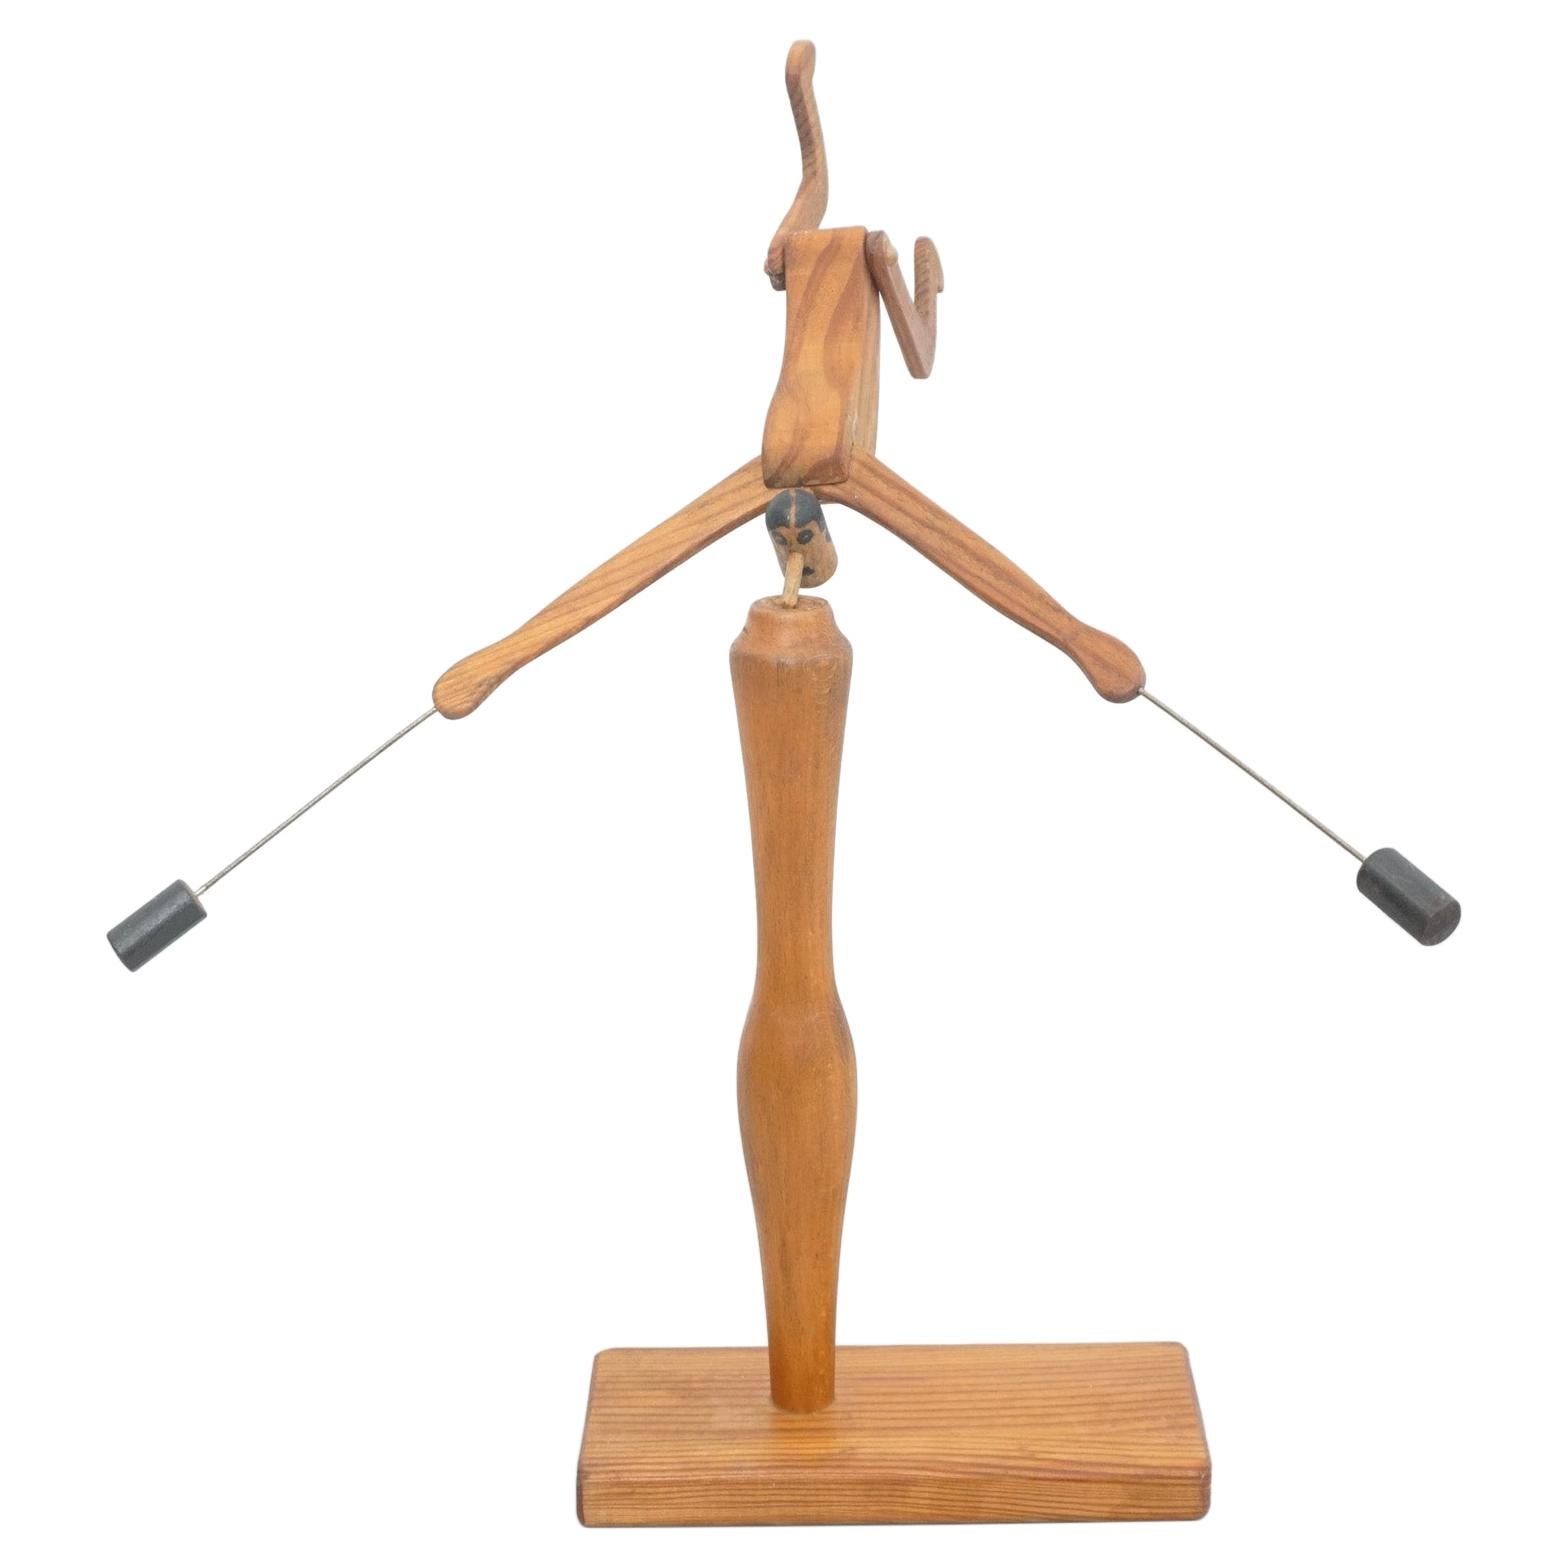 D.Invernon Equilibrist Wood Sculpture, 2020